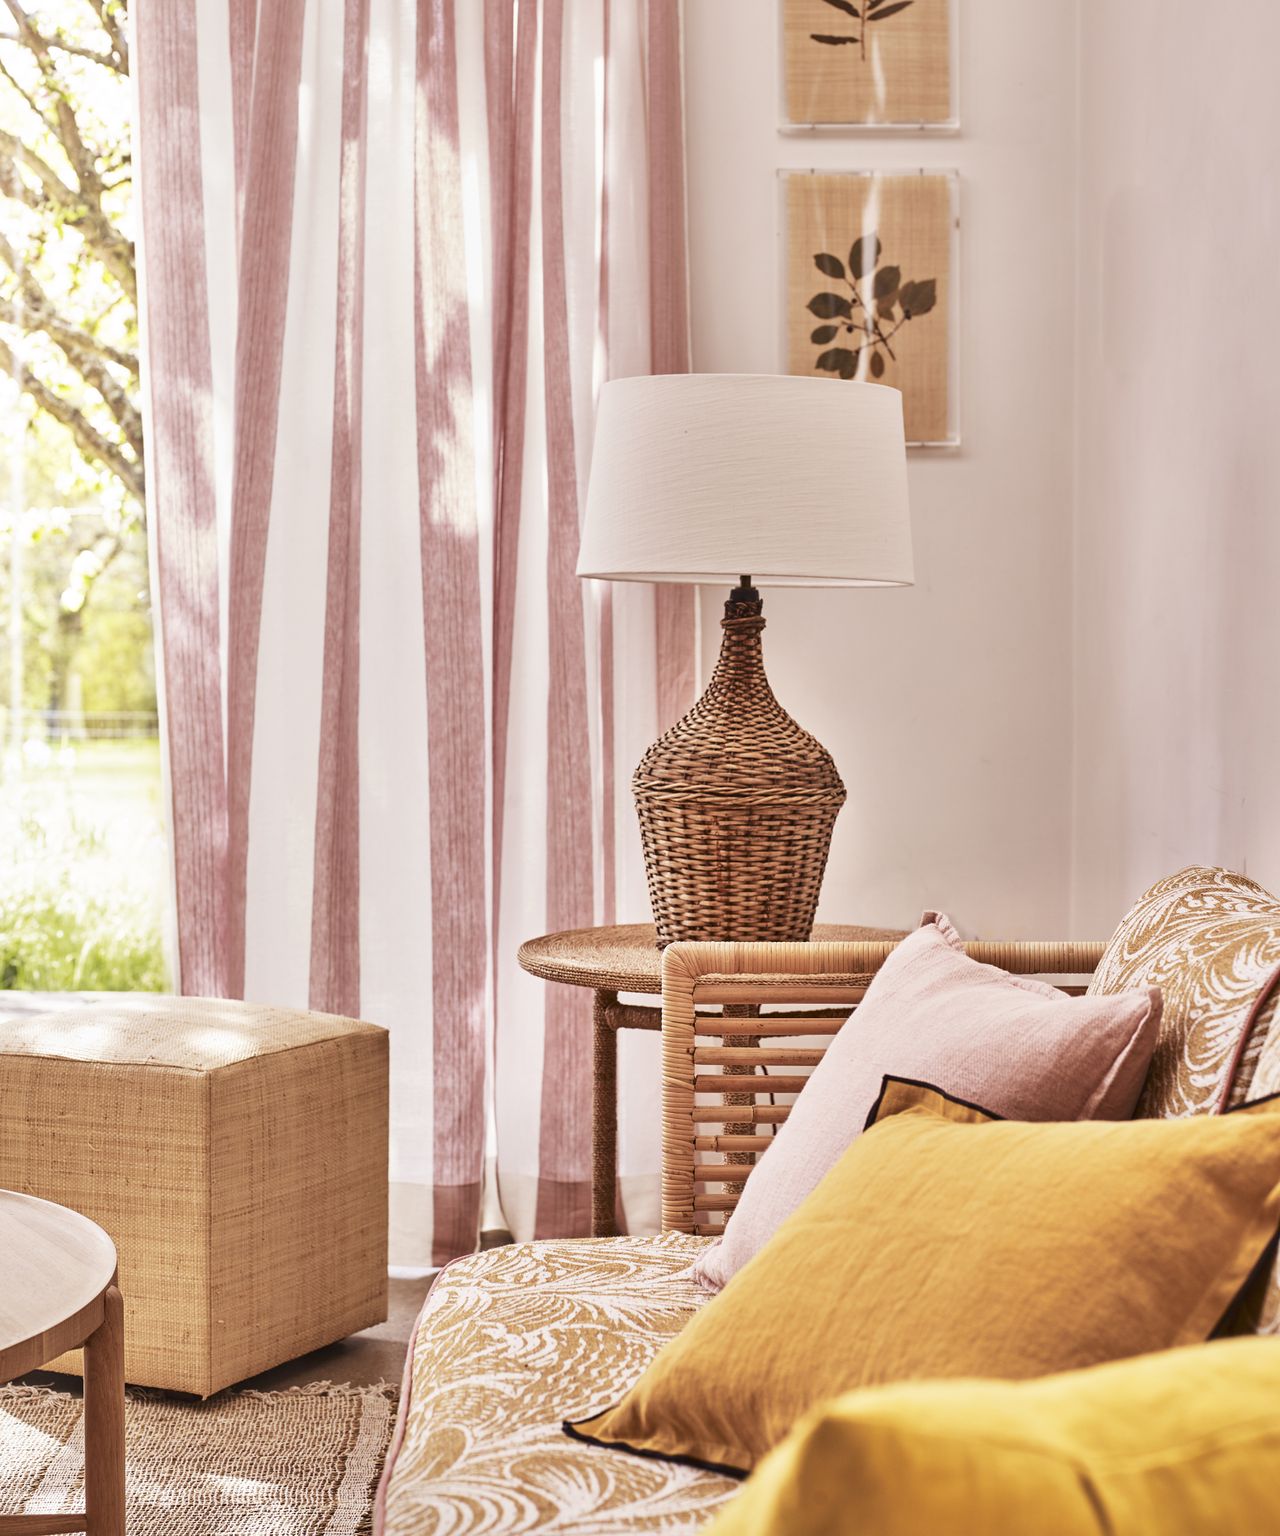 Living room curtain ideas: 17 tips for stylish drapery